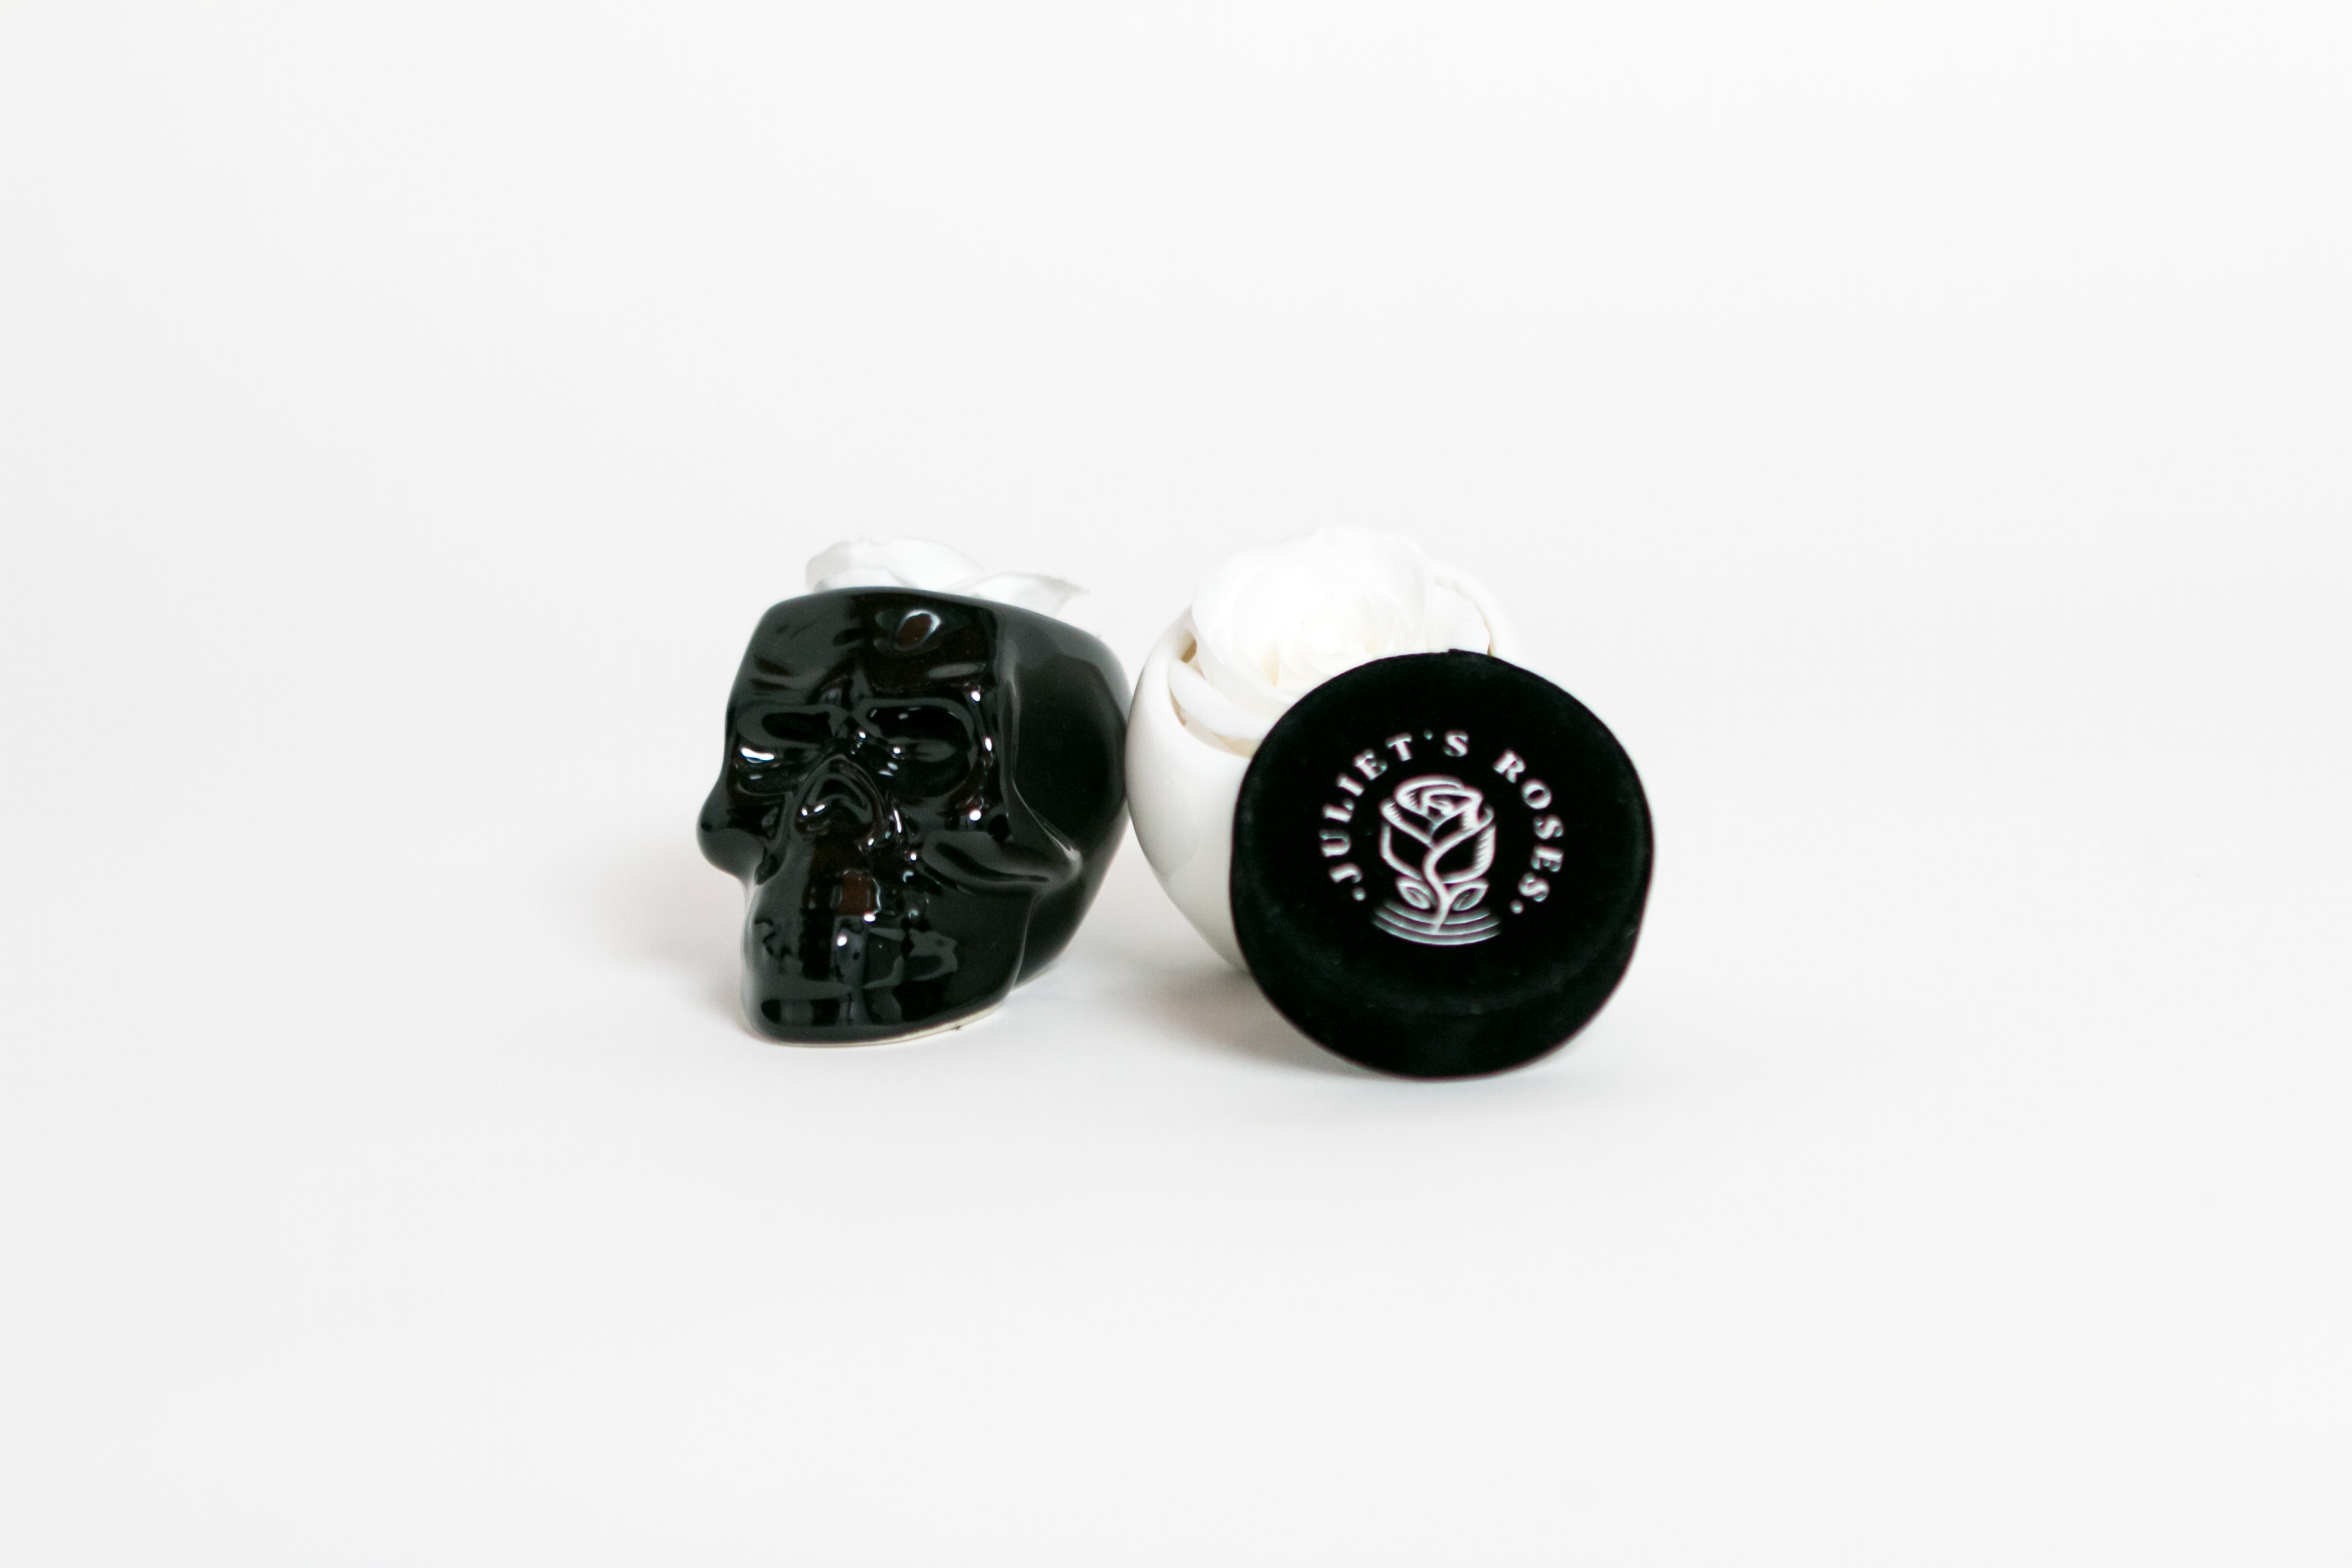 Black Halloween Skull with Rose - Juliet's Roses